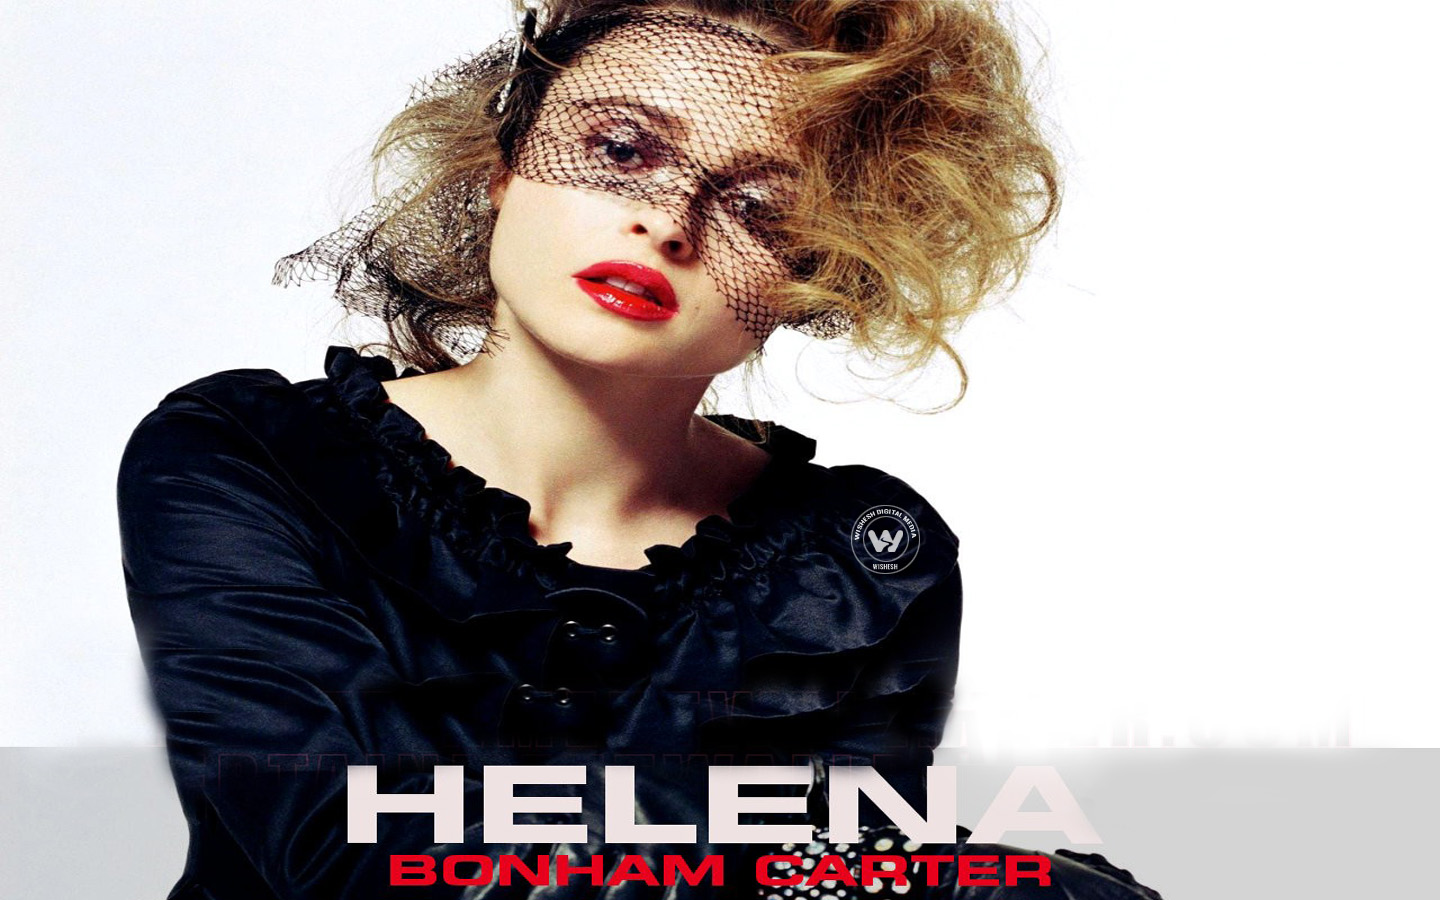 Helena Bonham Carter | Wallpaper 2of 14 | Helena Bonham Carter Hot Pictures | Helena Bonham Carter Hot Wallpapers